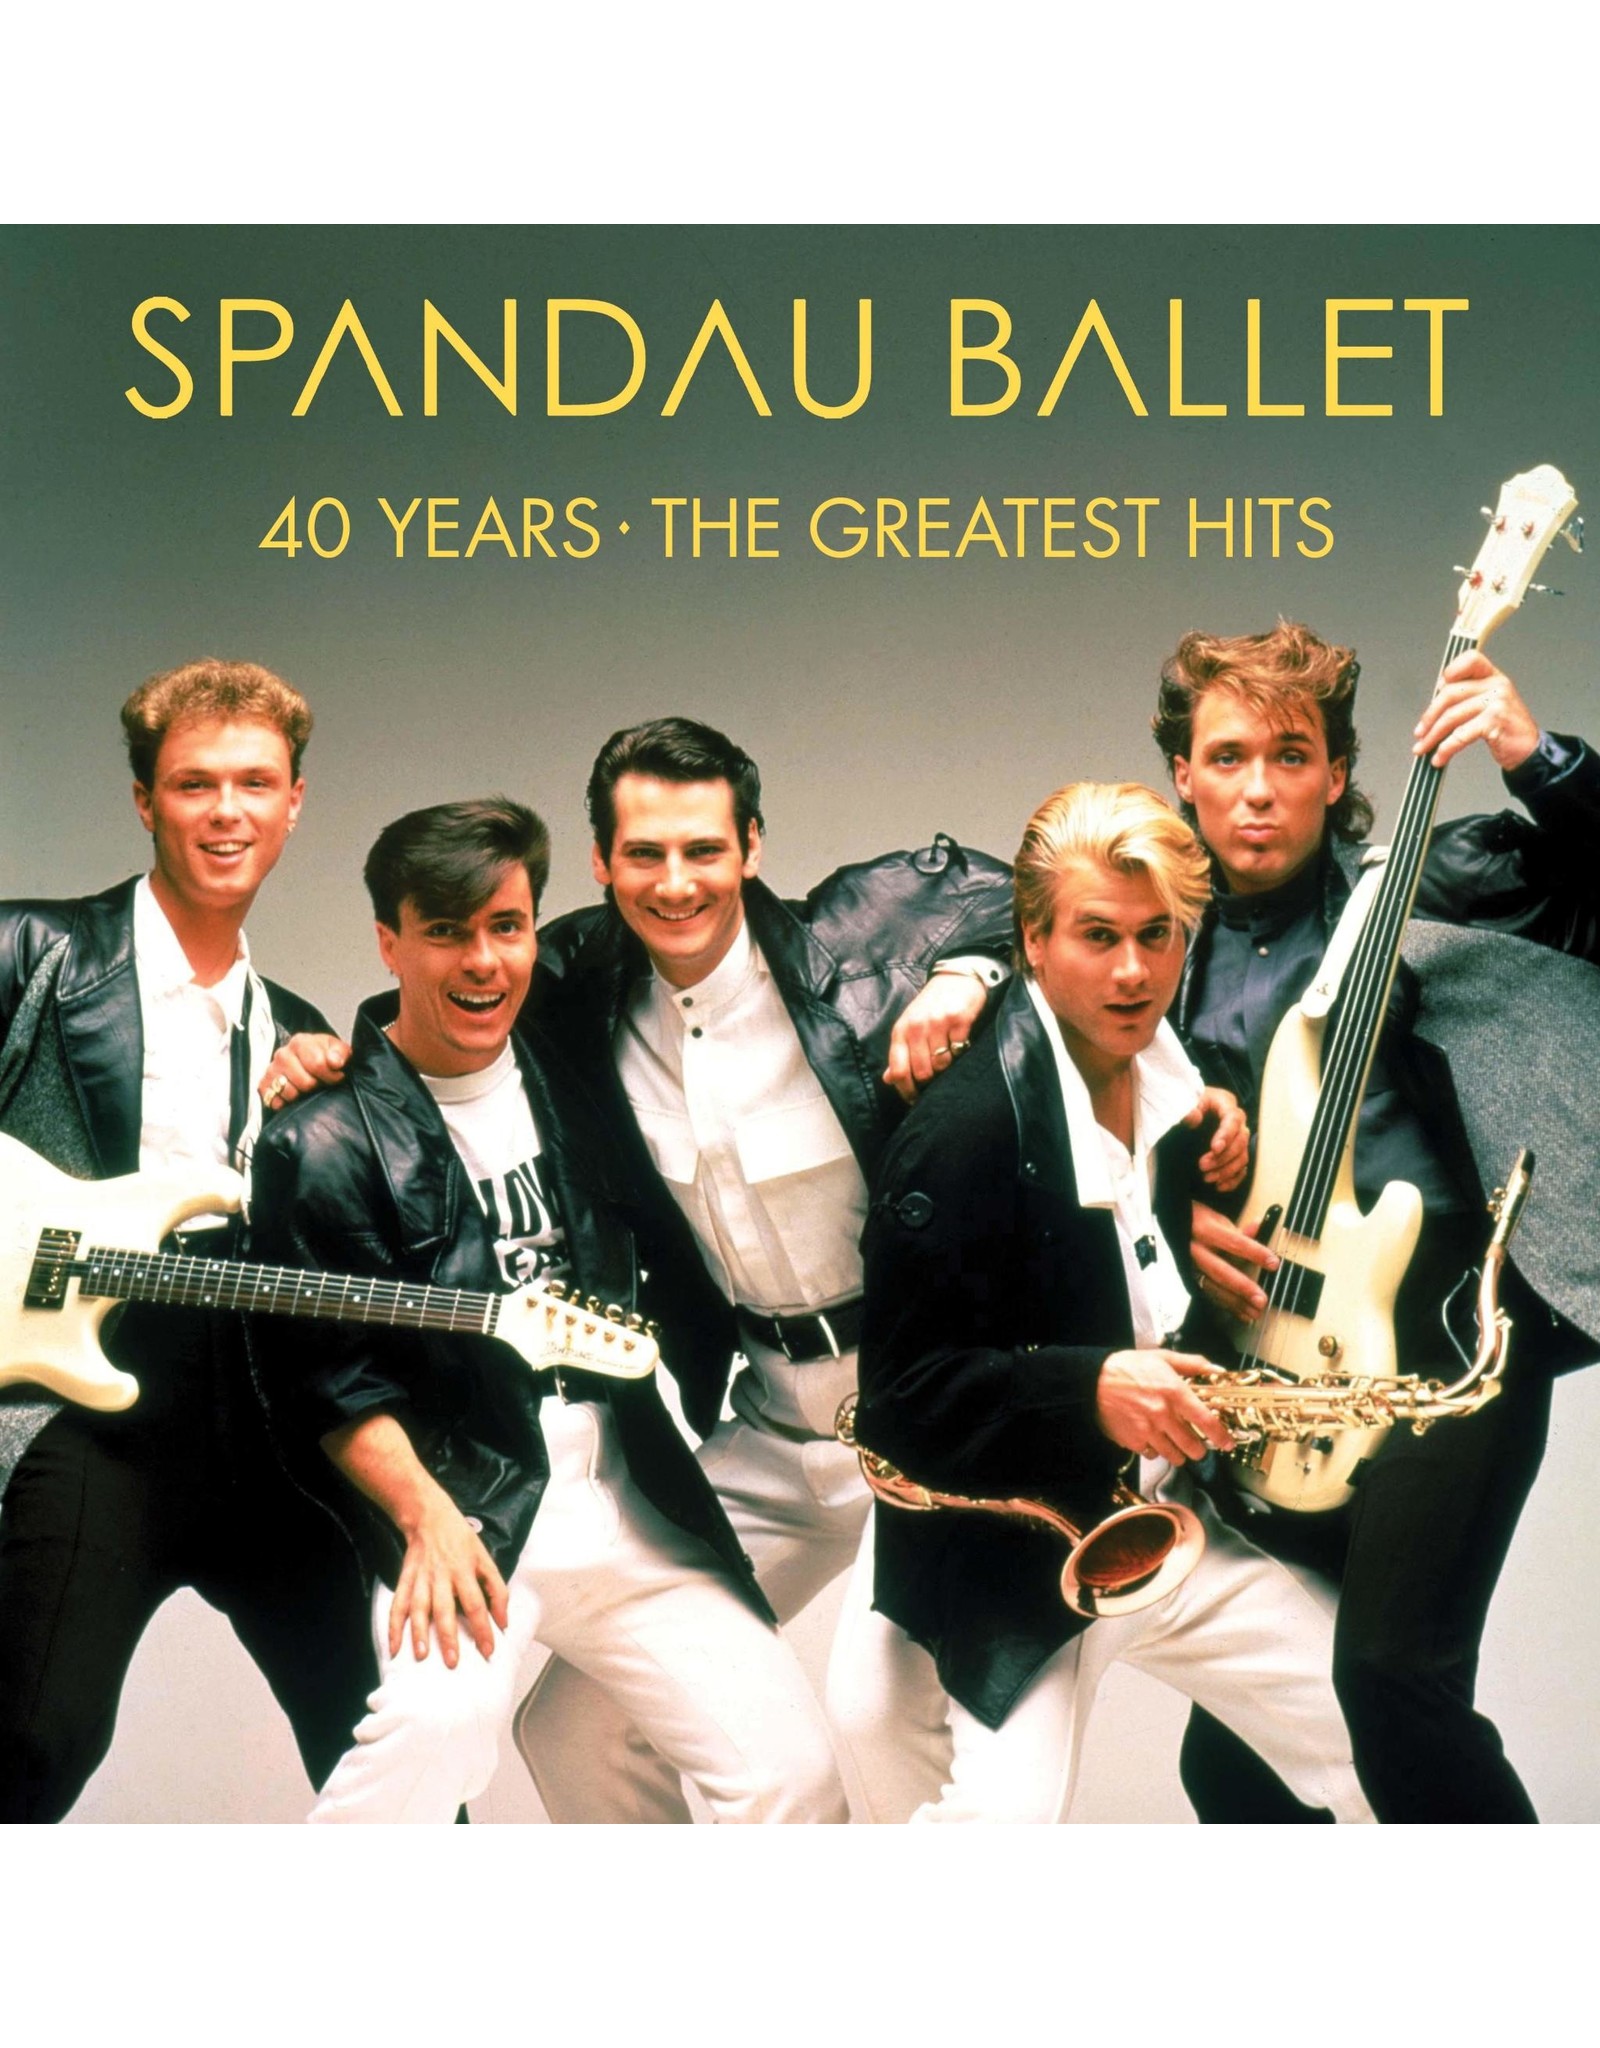 Spandau Ballet - 40 Years: The Greatest Hits (Red Vinyl)